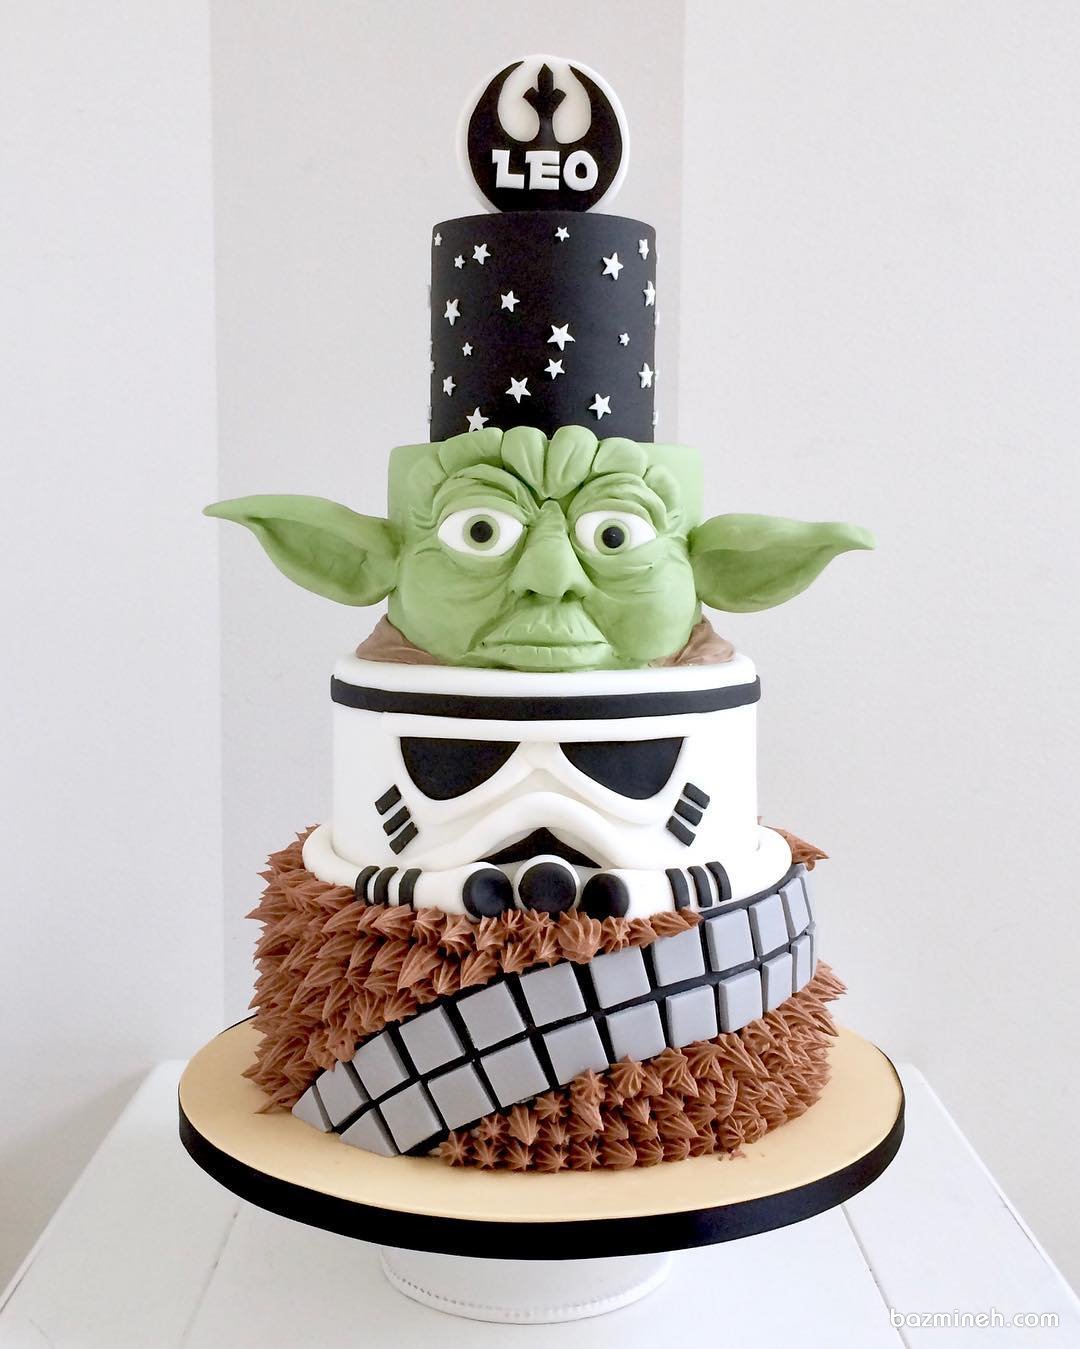 کیک فوندانت جشن تولد کودک با تم کارتون جنگ ستارگان (Star Wars)